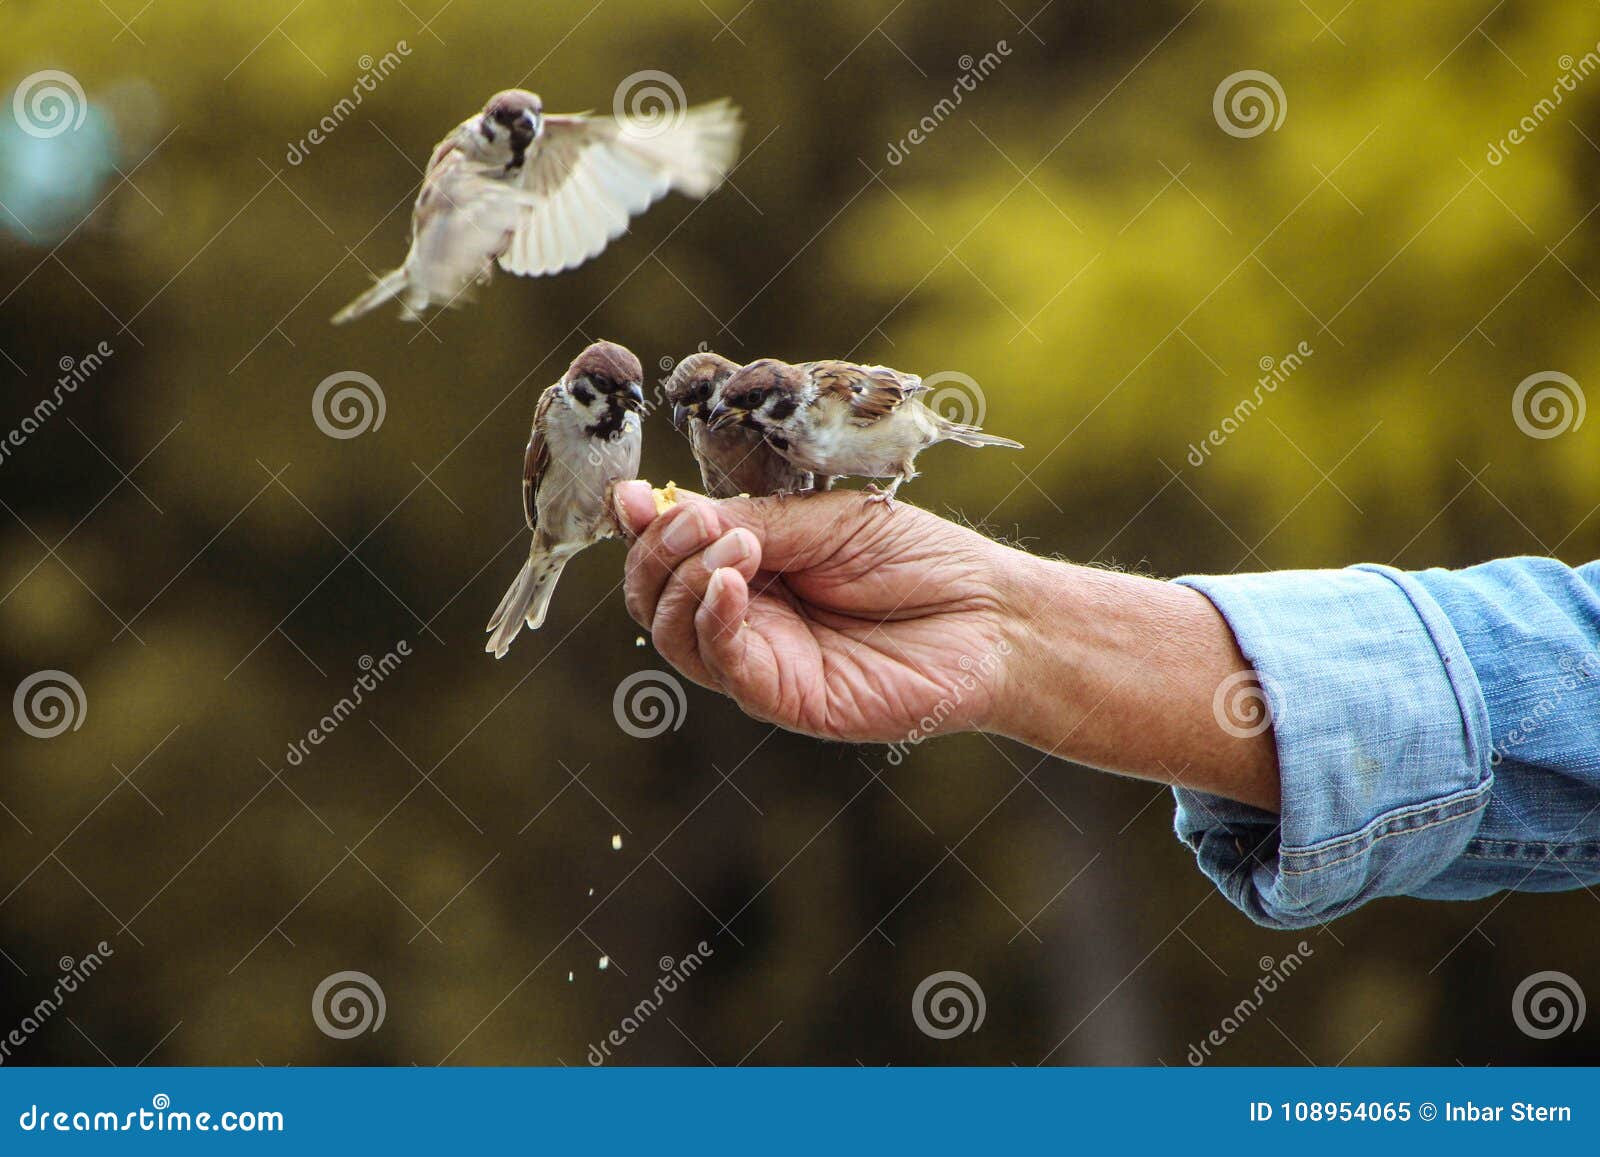 Feeding birds stock image. Image of japan, wild, hand - 108954065